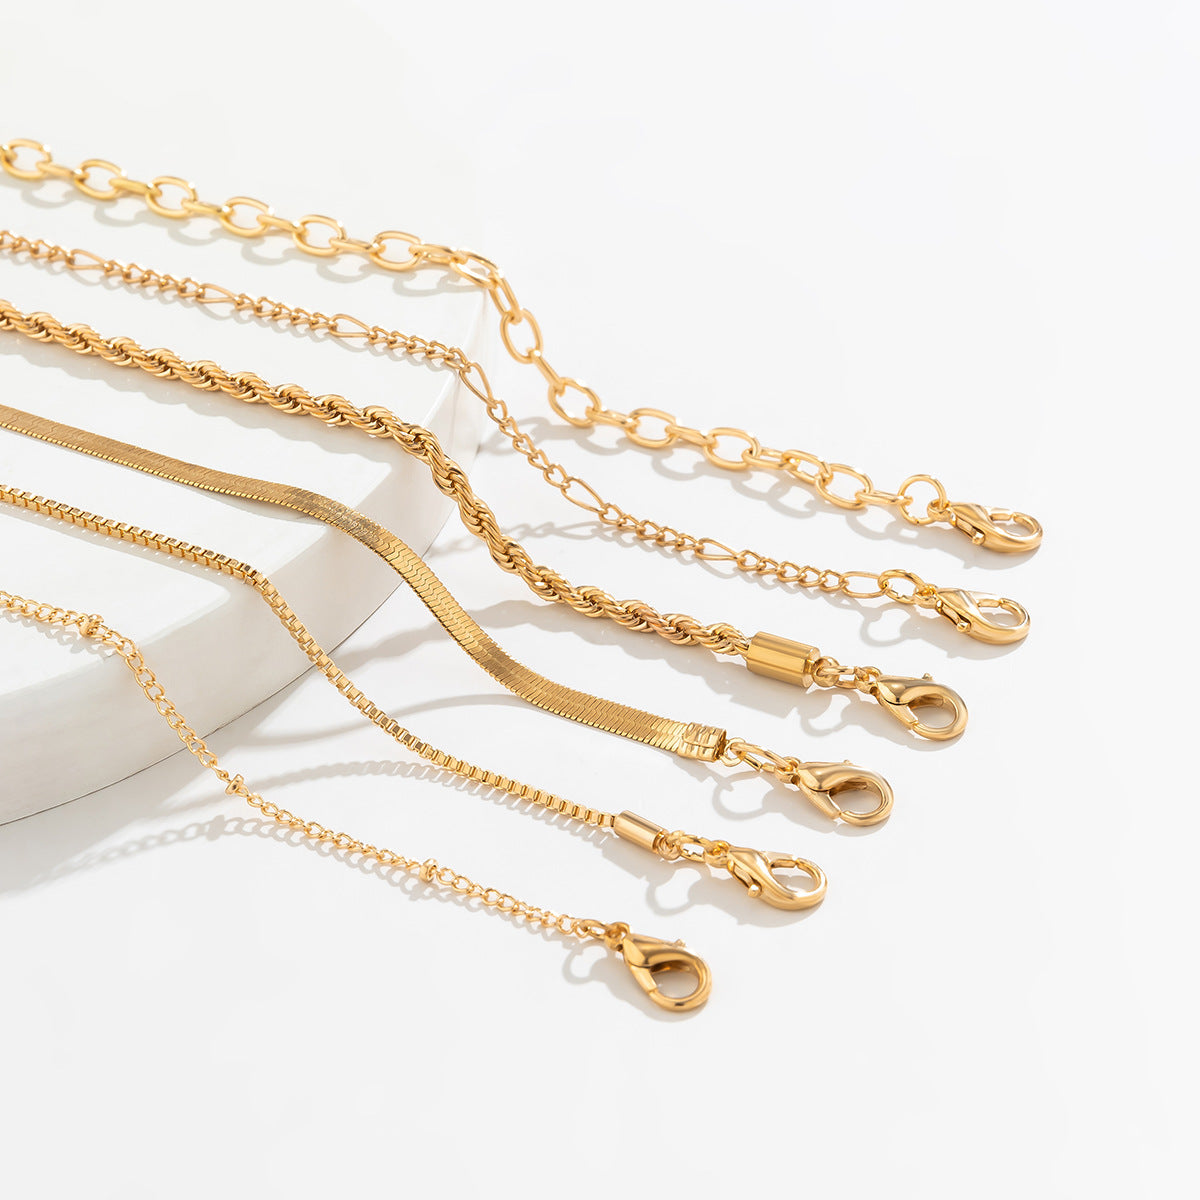 18K gold trendy simple stacked design bracelet set - Syble's